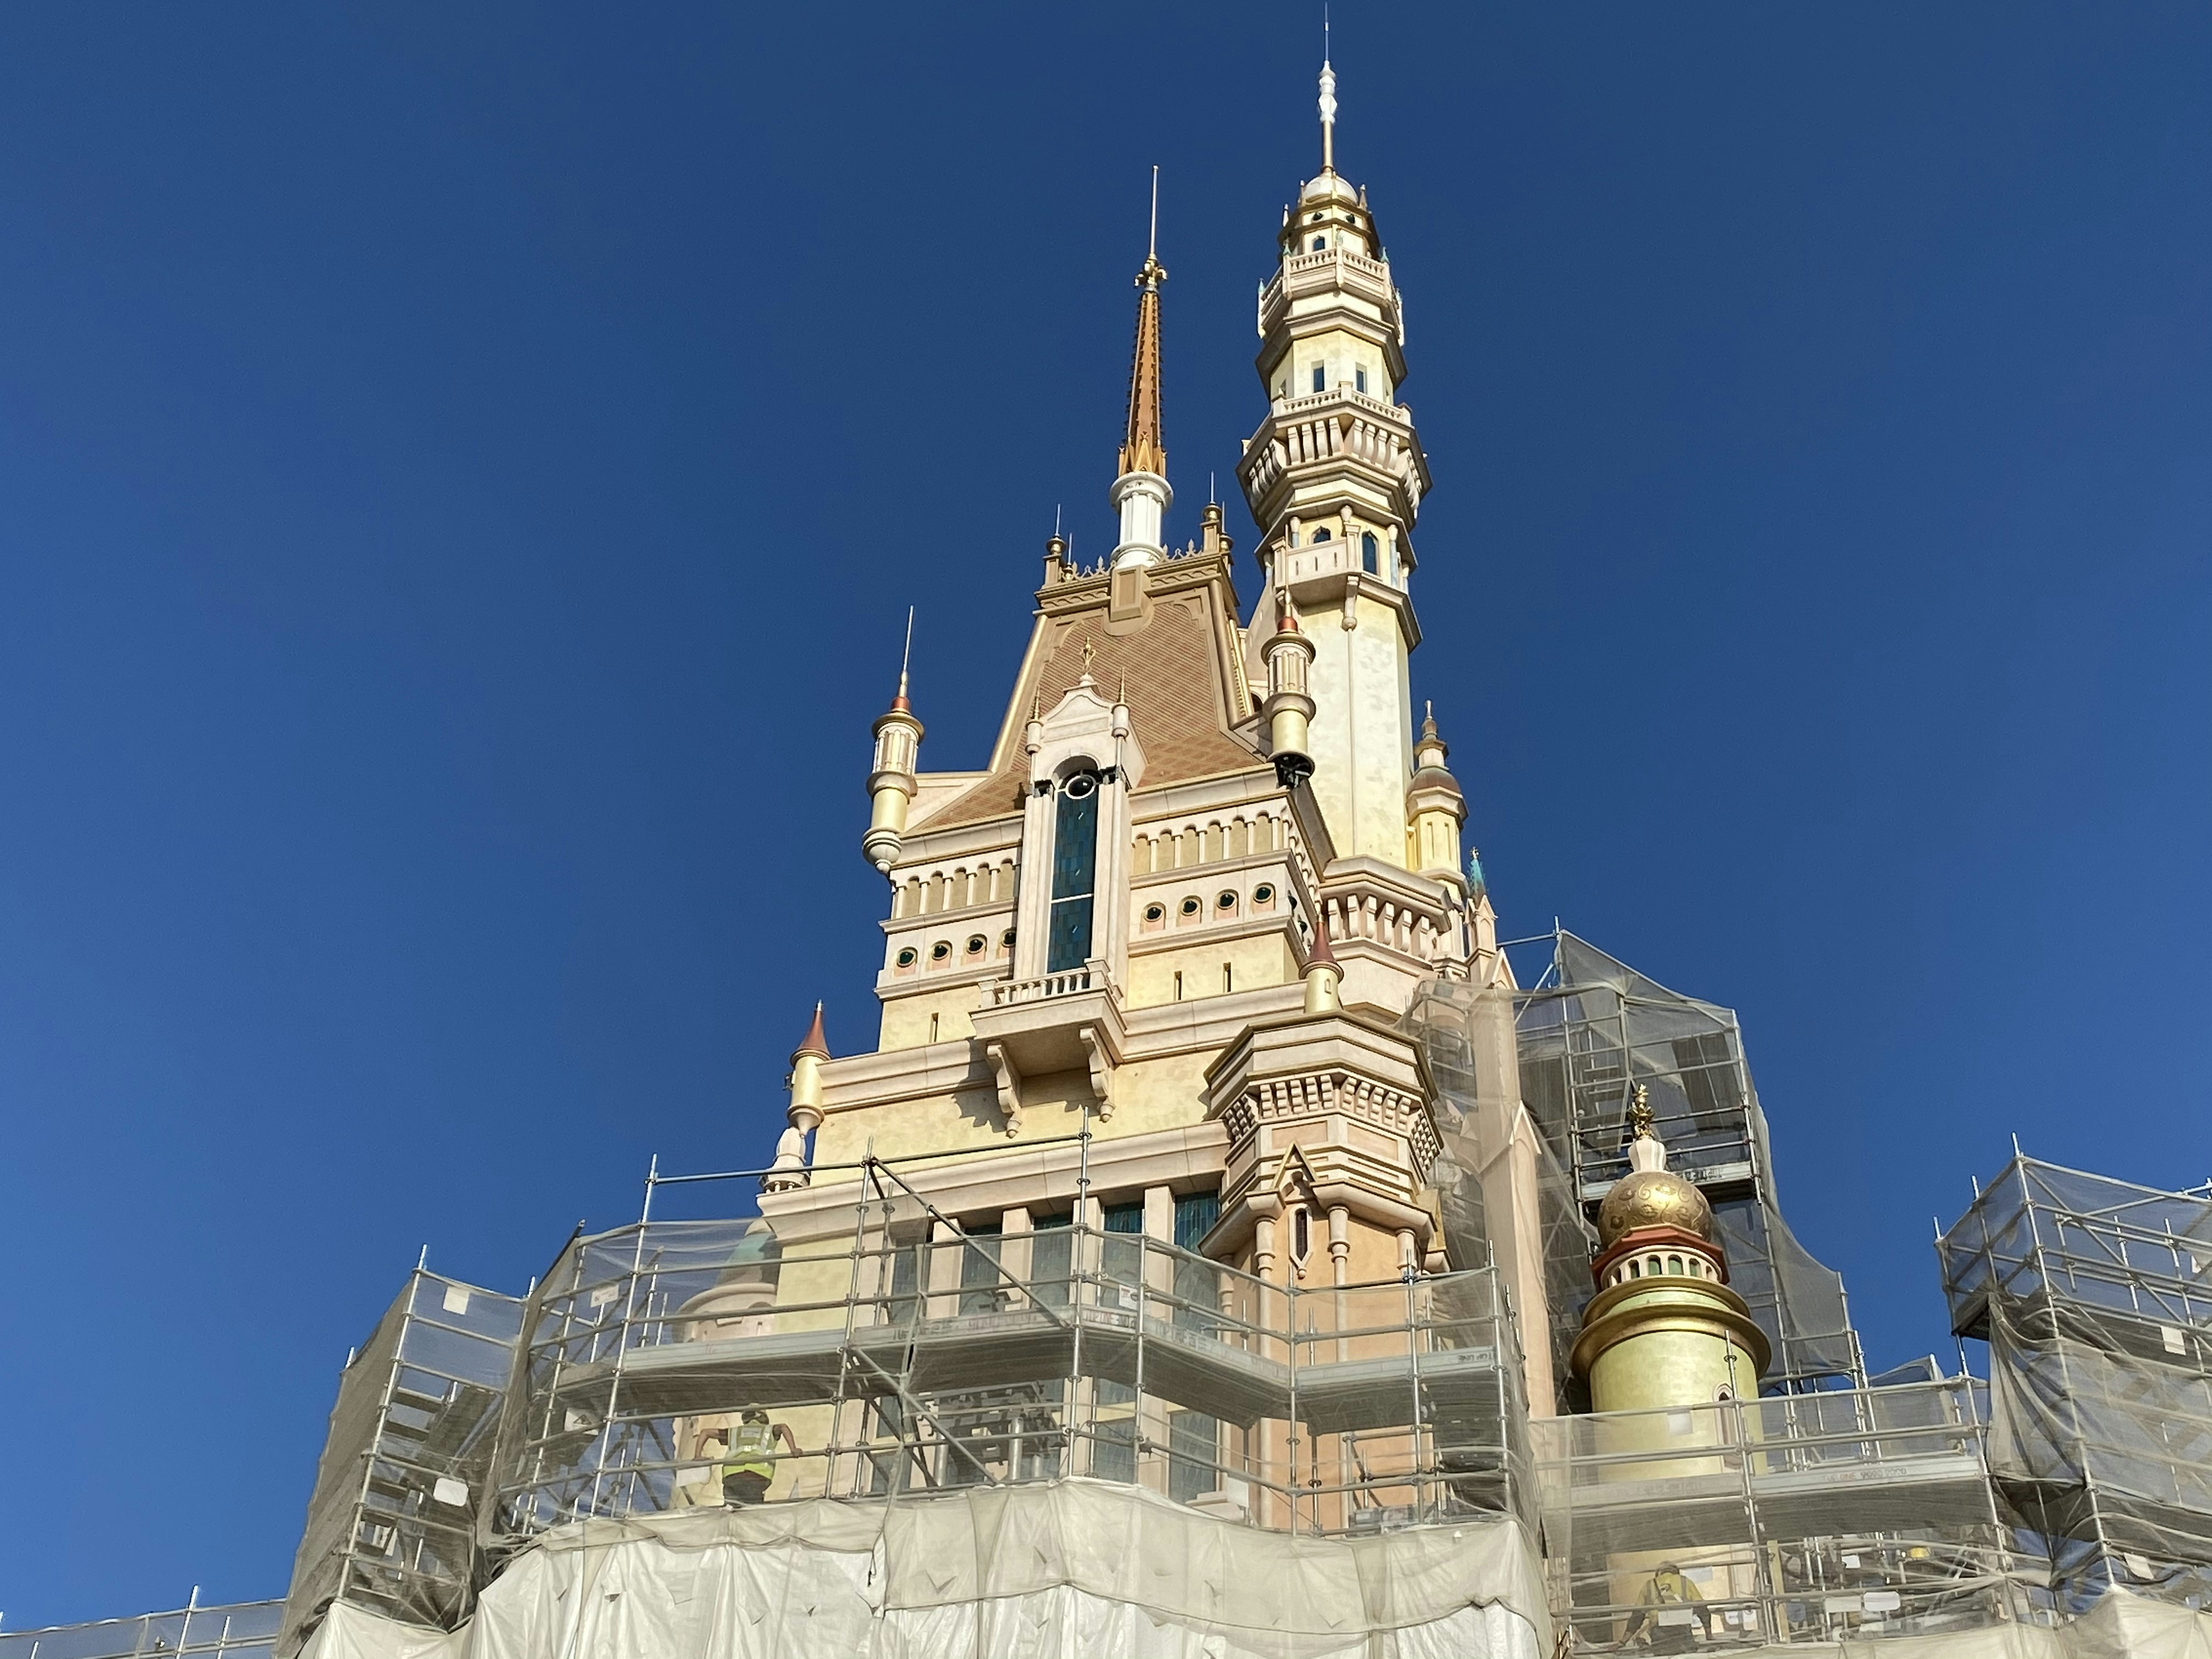 hk castle reimagining update jan 2020 18.jpeg?auto=compress%2Cformat&ixlib=php 1.2